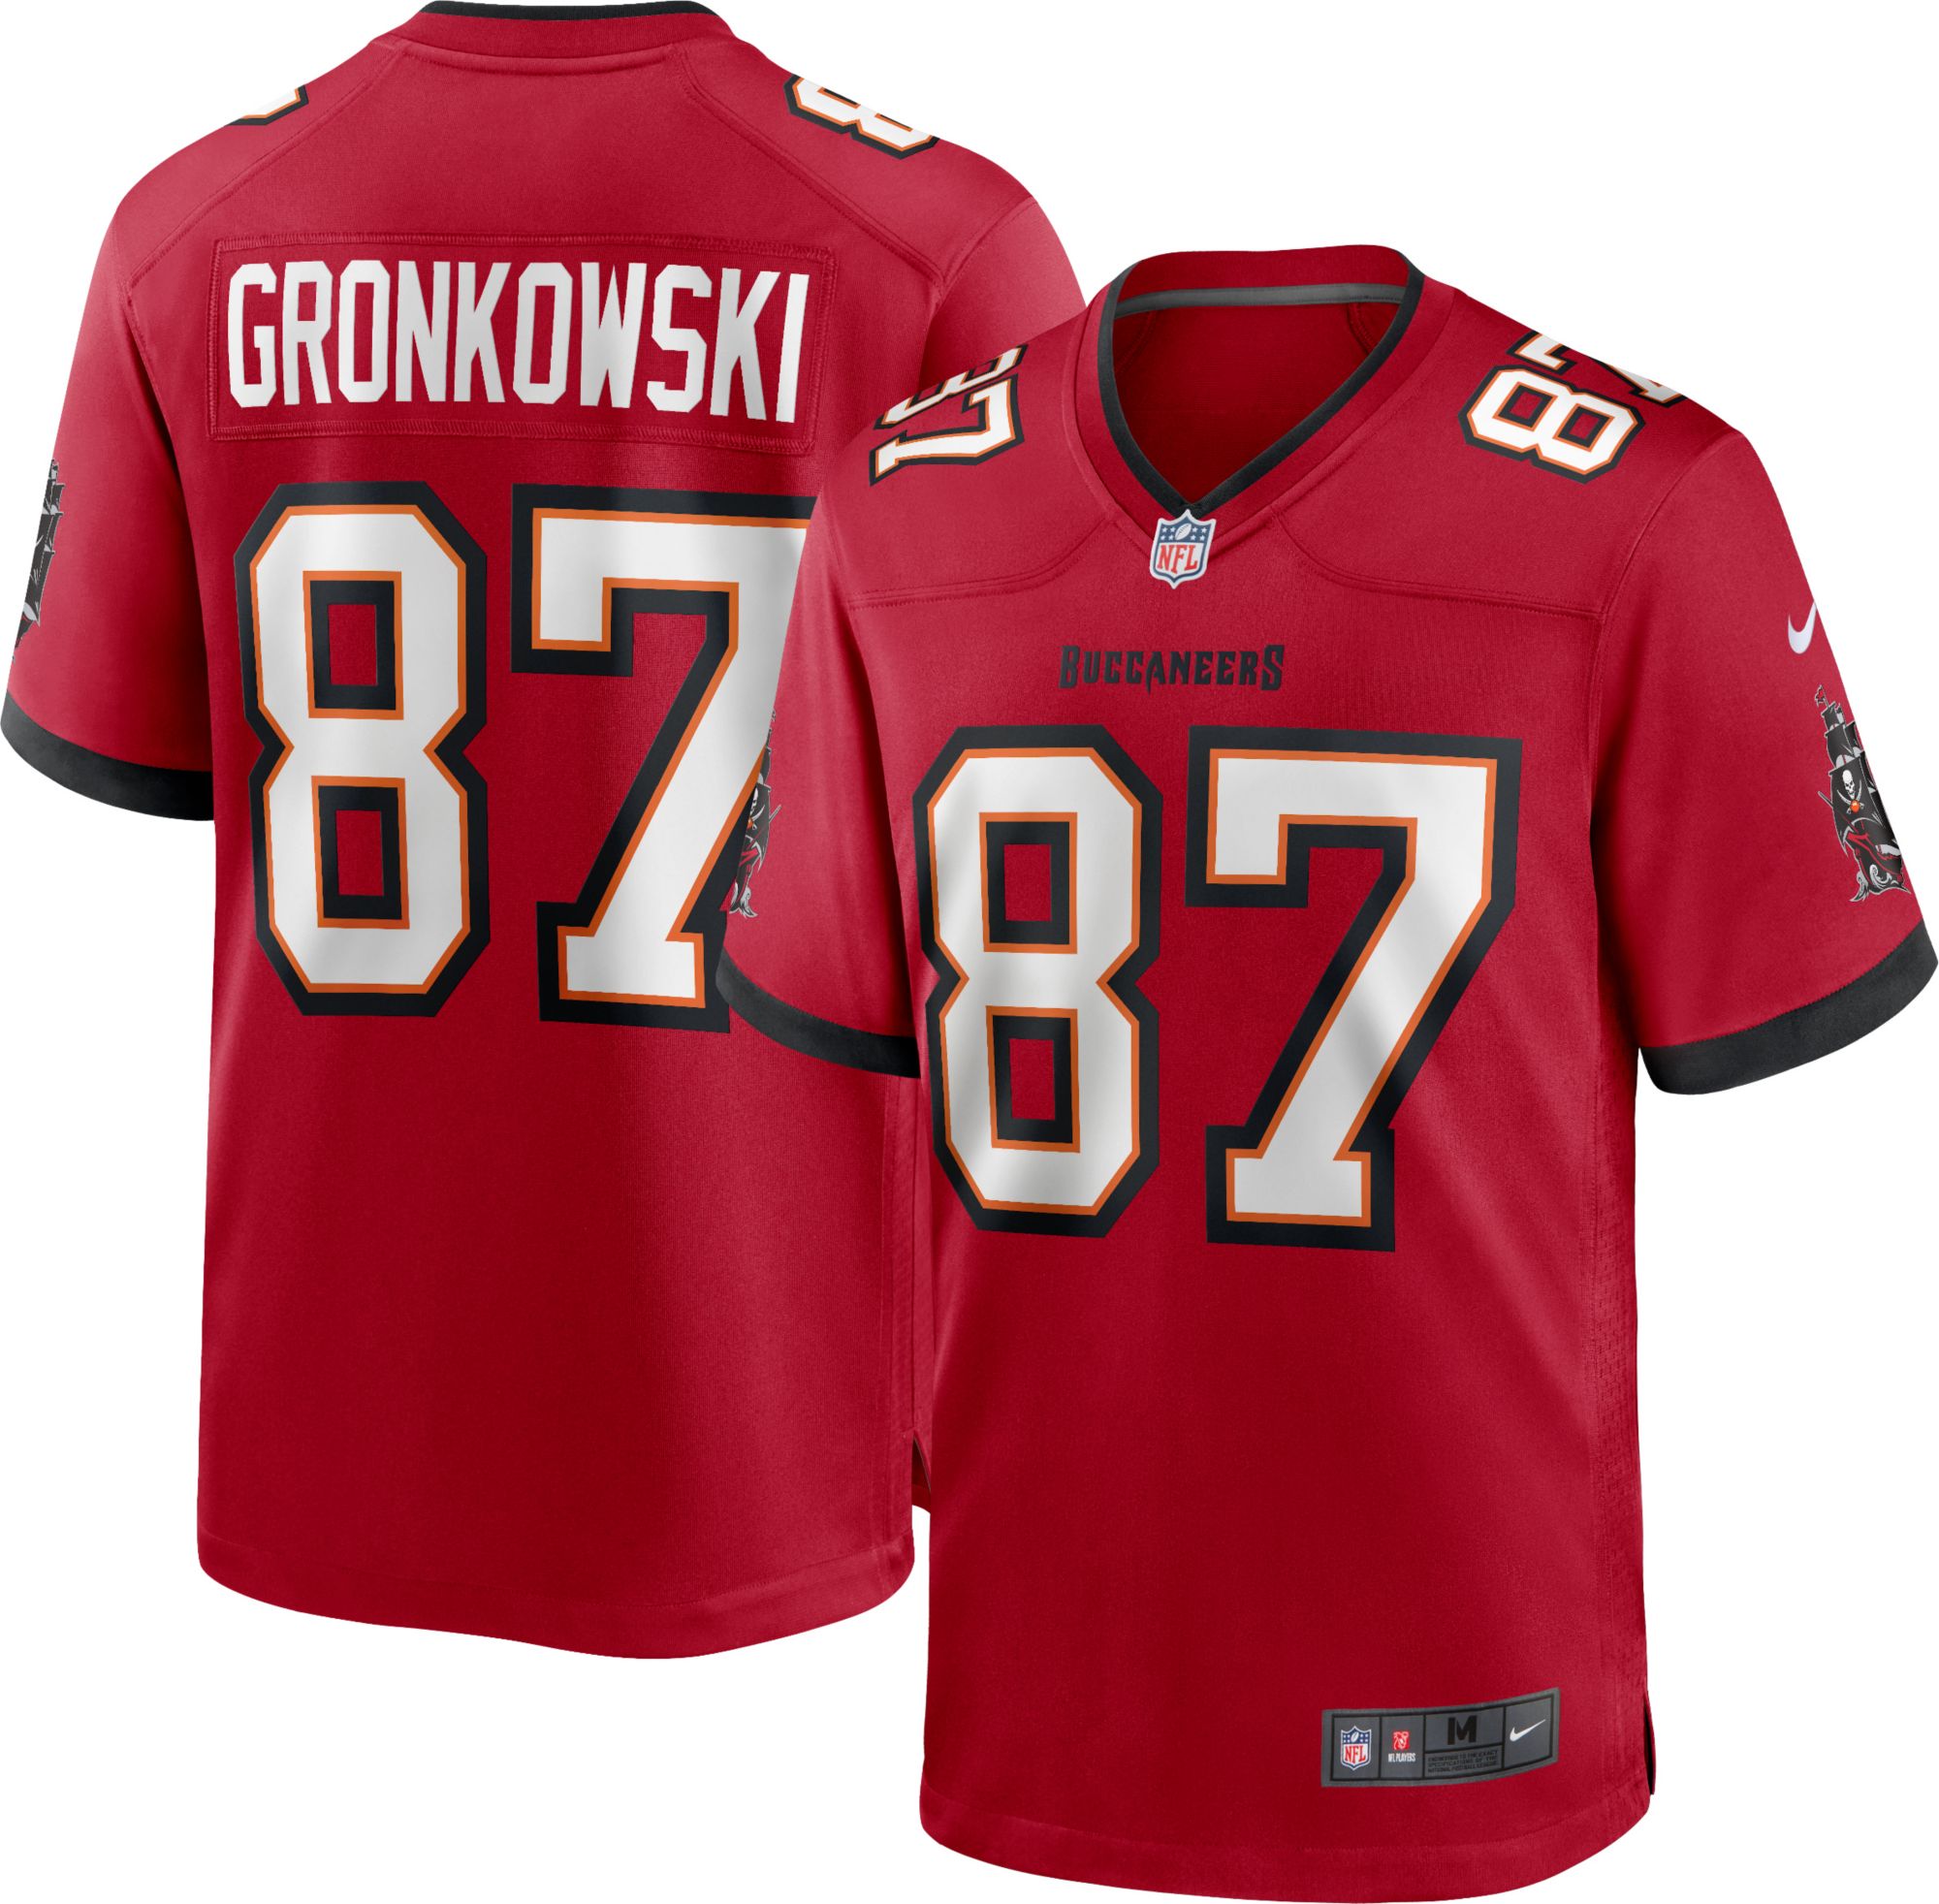 red gronkowski jersey